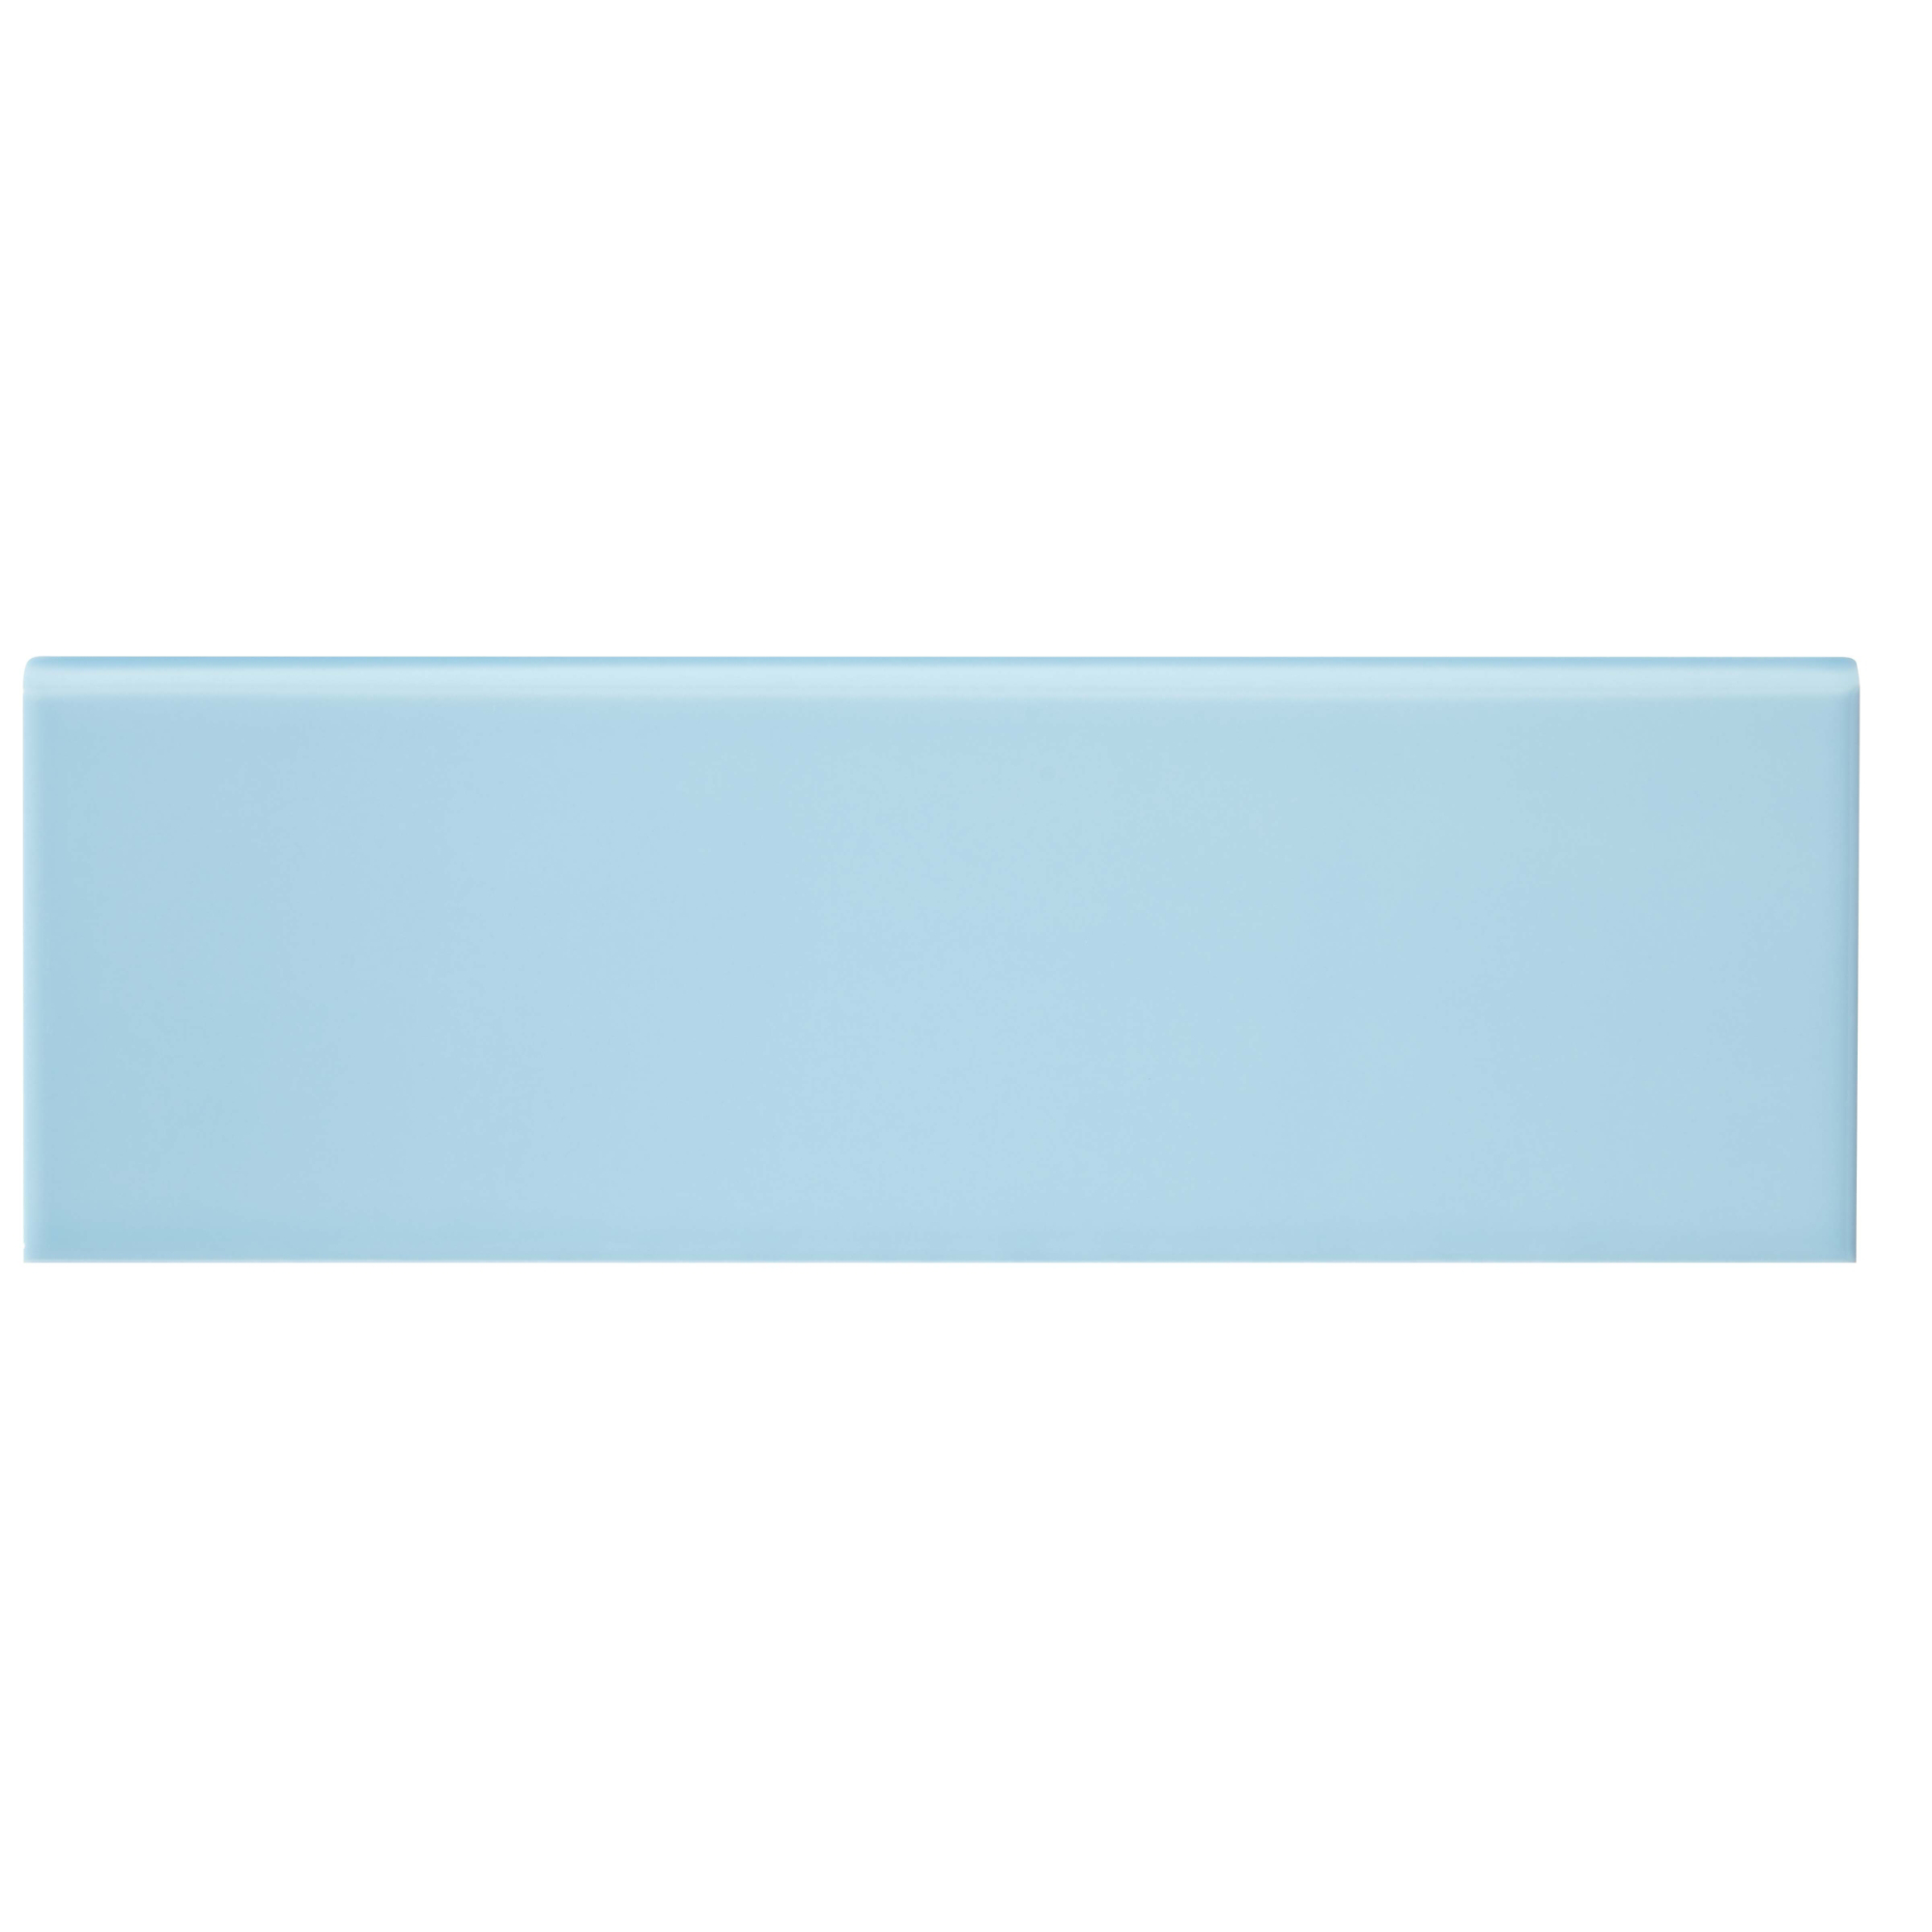 Imperial Sky Blue Gls (074) REL 10x30cm